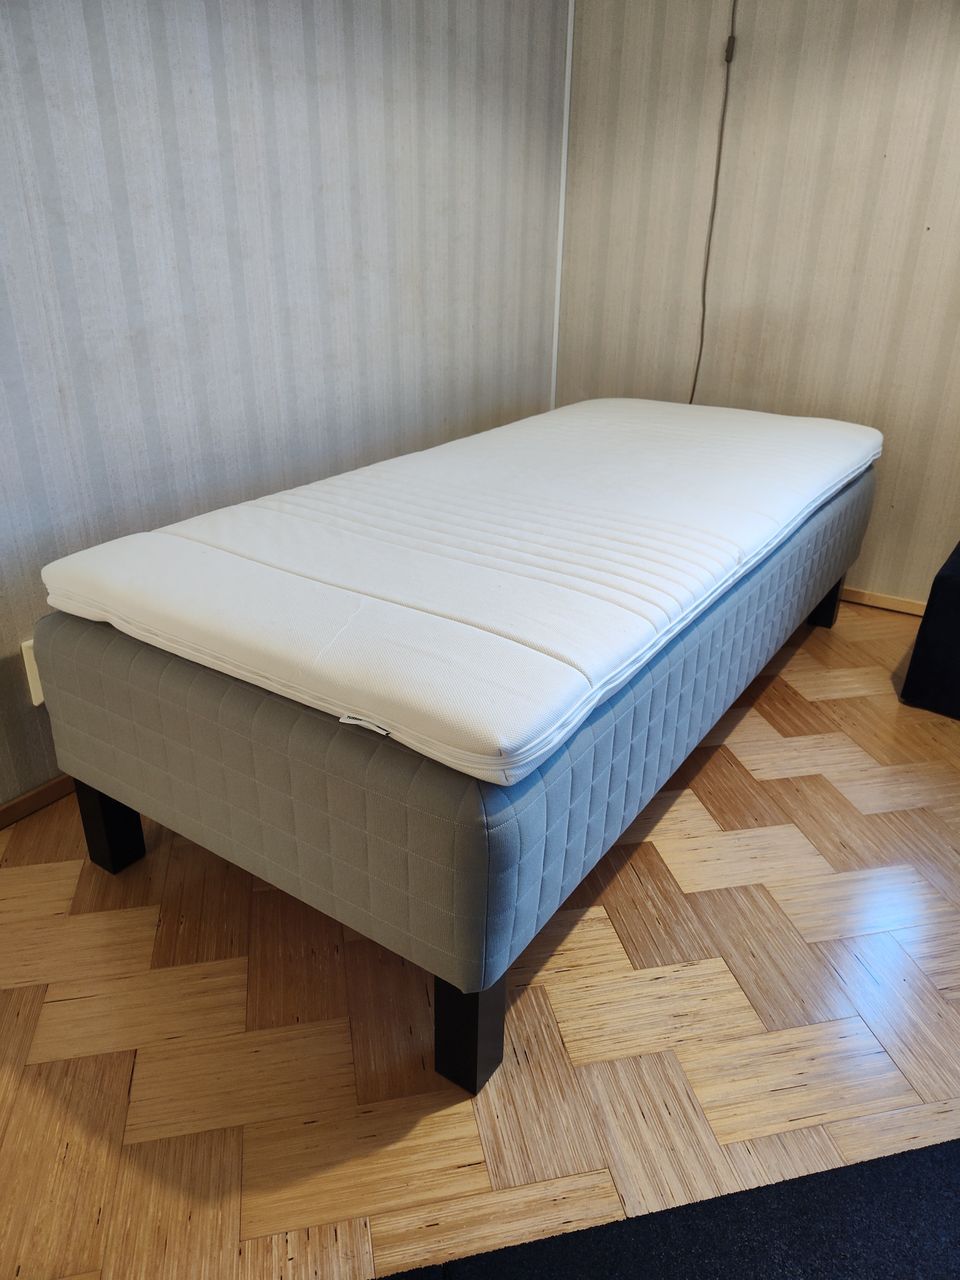 Ikea Skårer runkopatja + Tussöy petari + sängynjalat